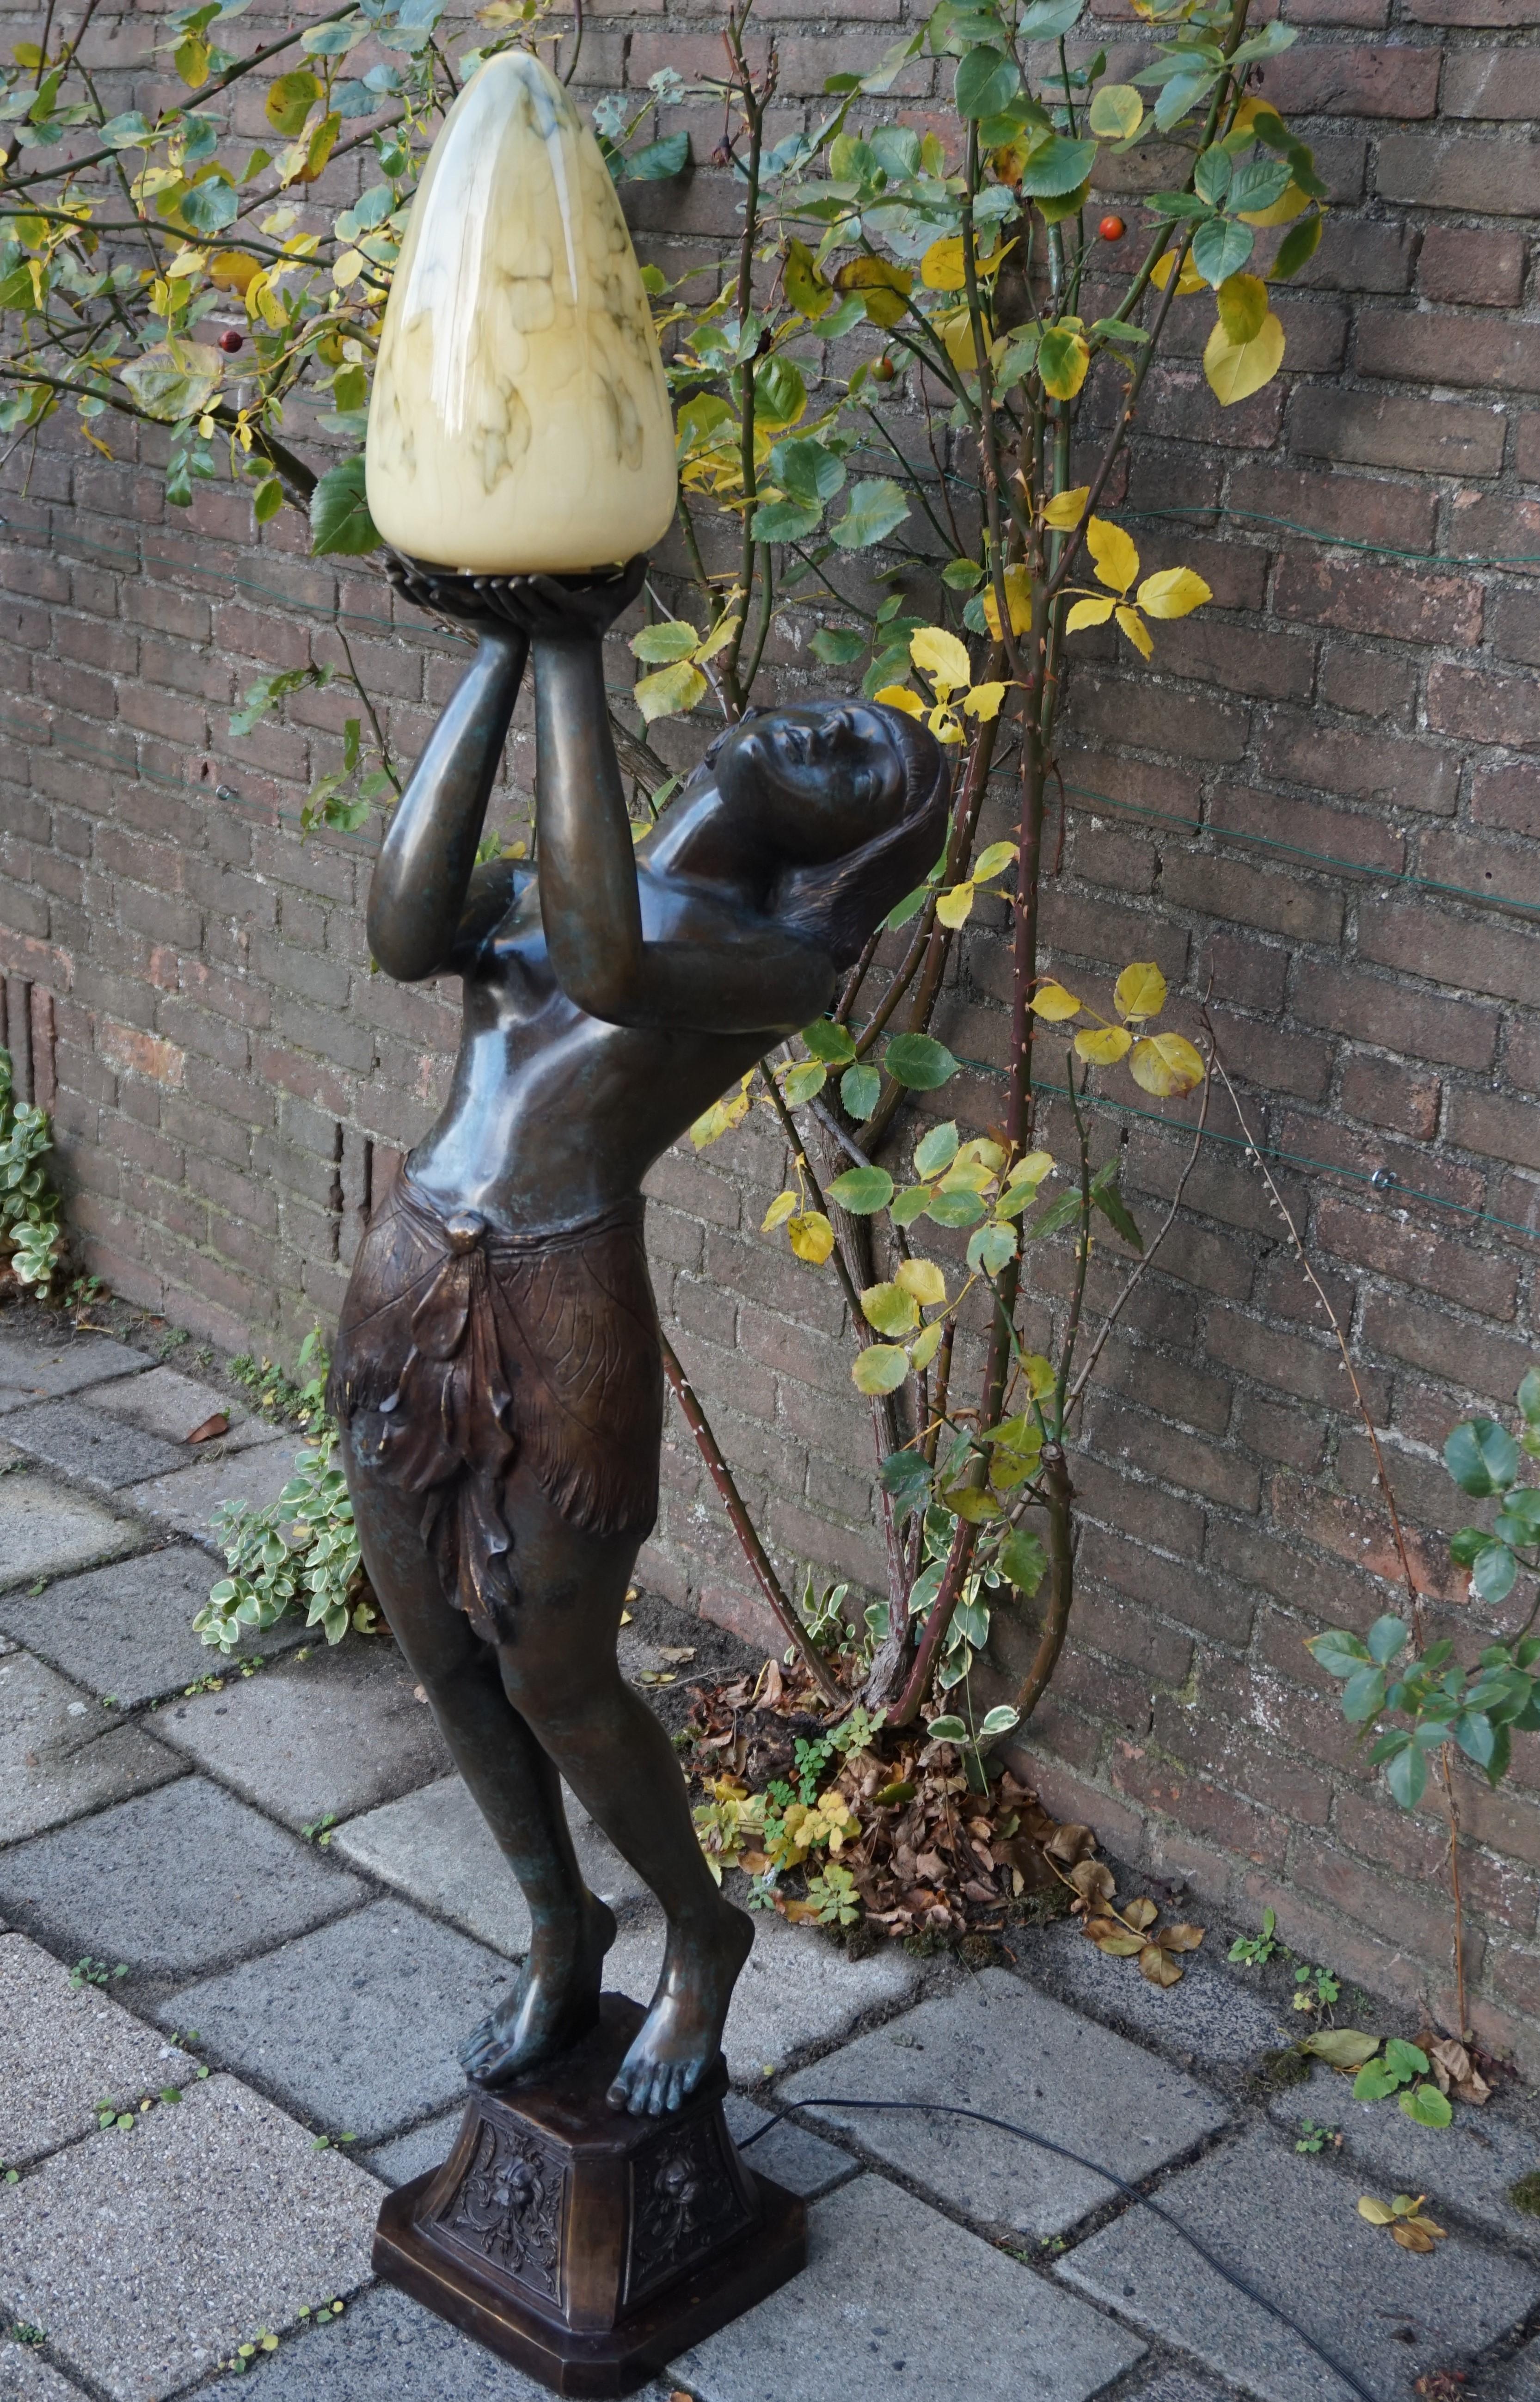 art deco bronze lady lamp